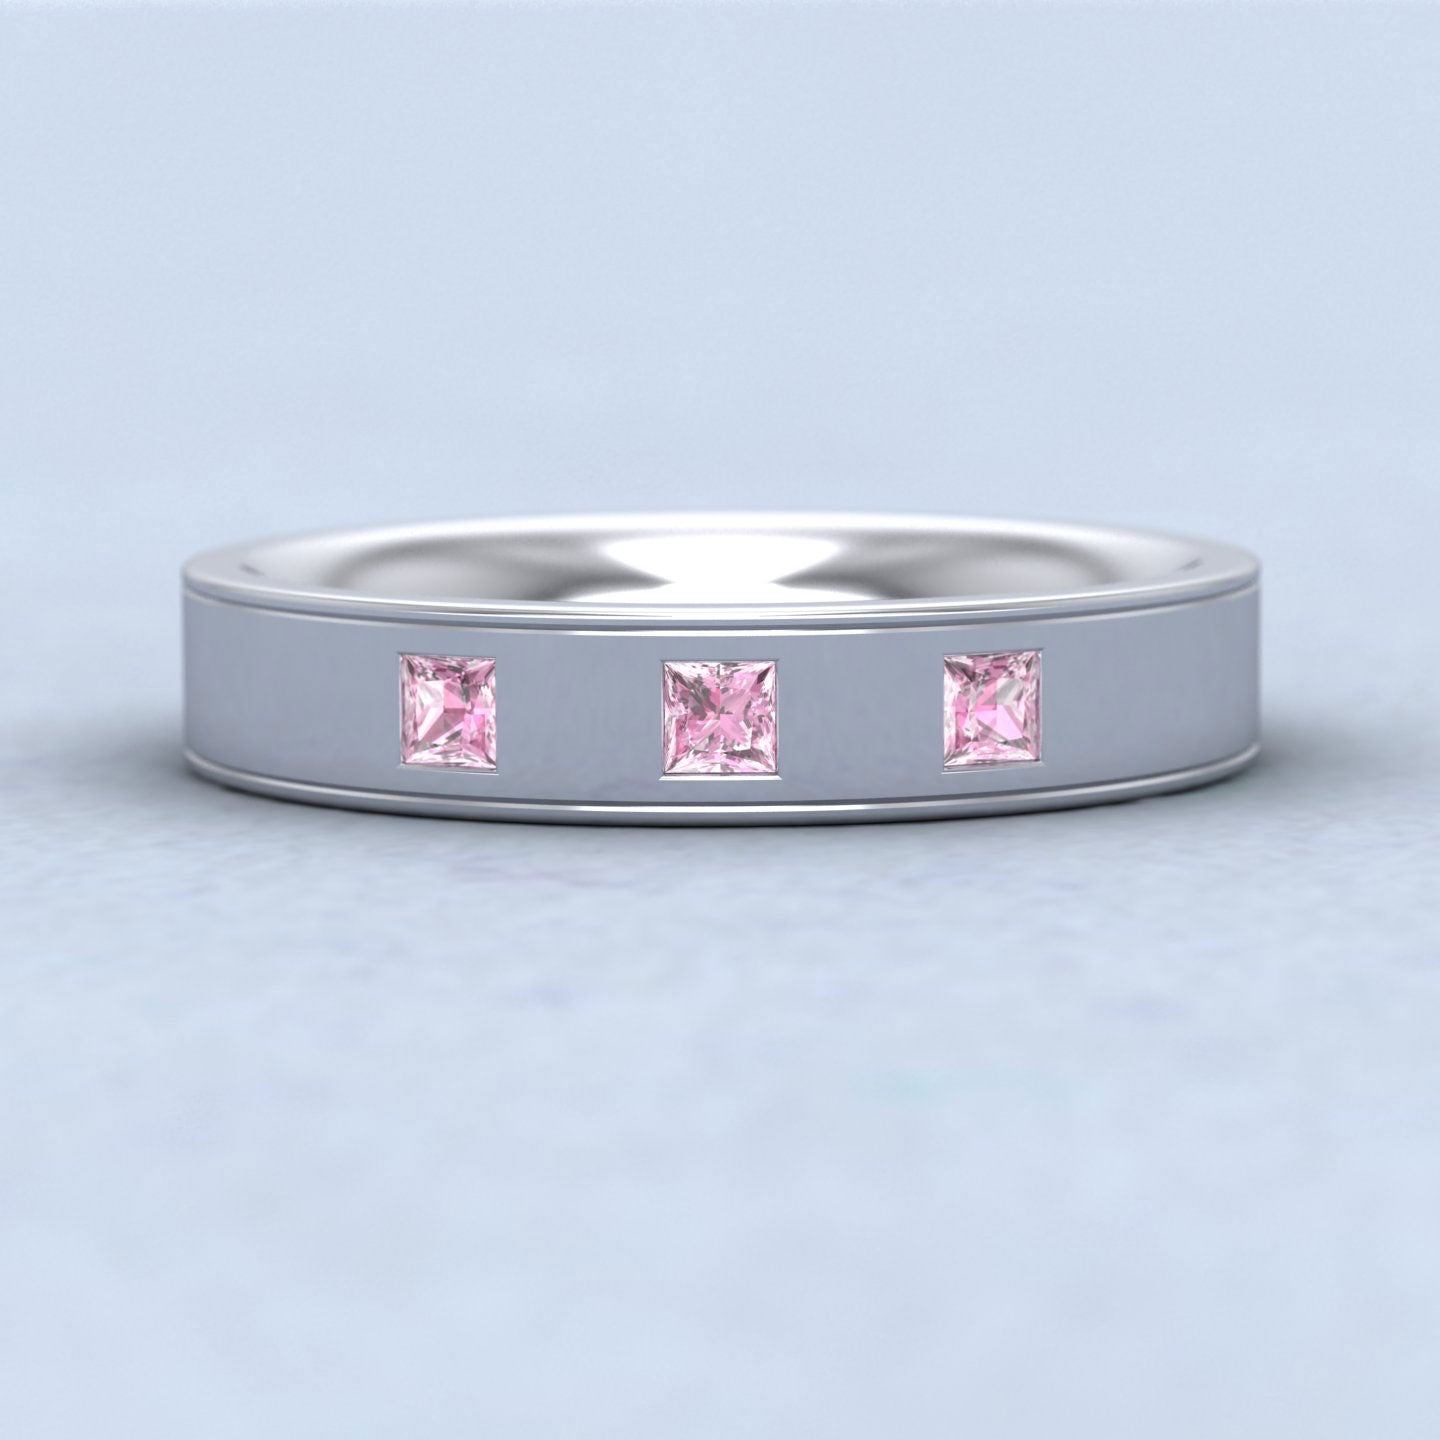 Princess Cut Pink Sapphire And Line Patterned 950 Palladium 4mm Wedding Ring